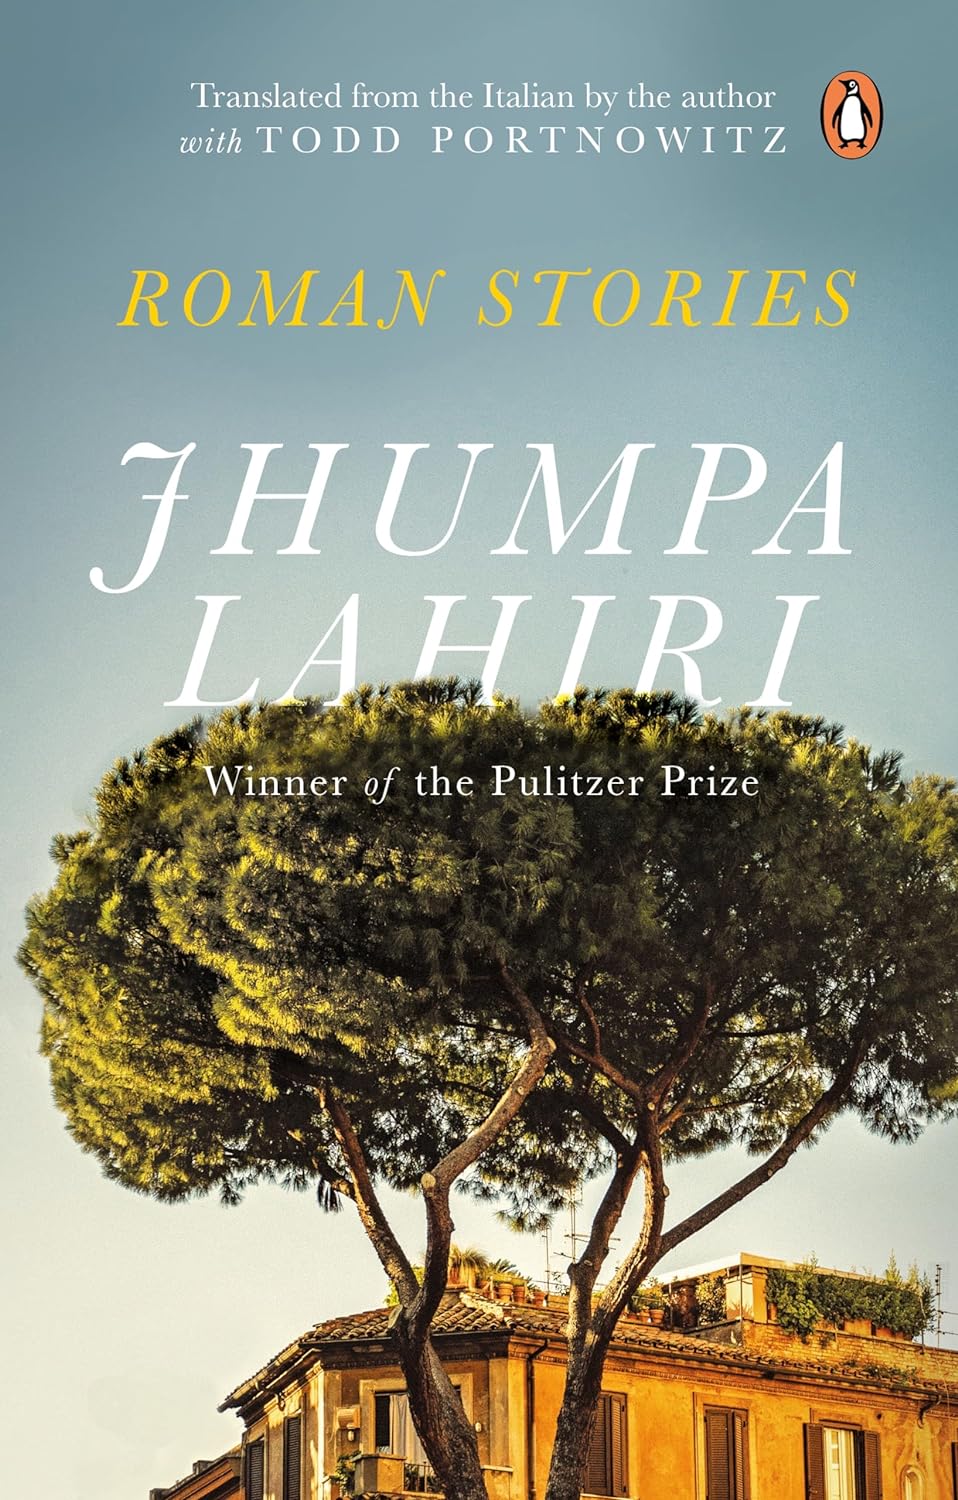 Roman stories by Jhumpa Lahiri